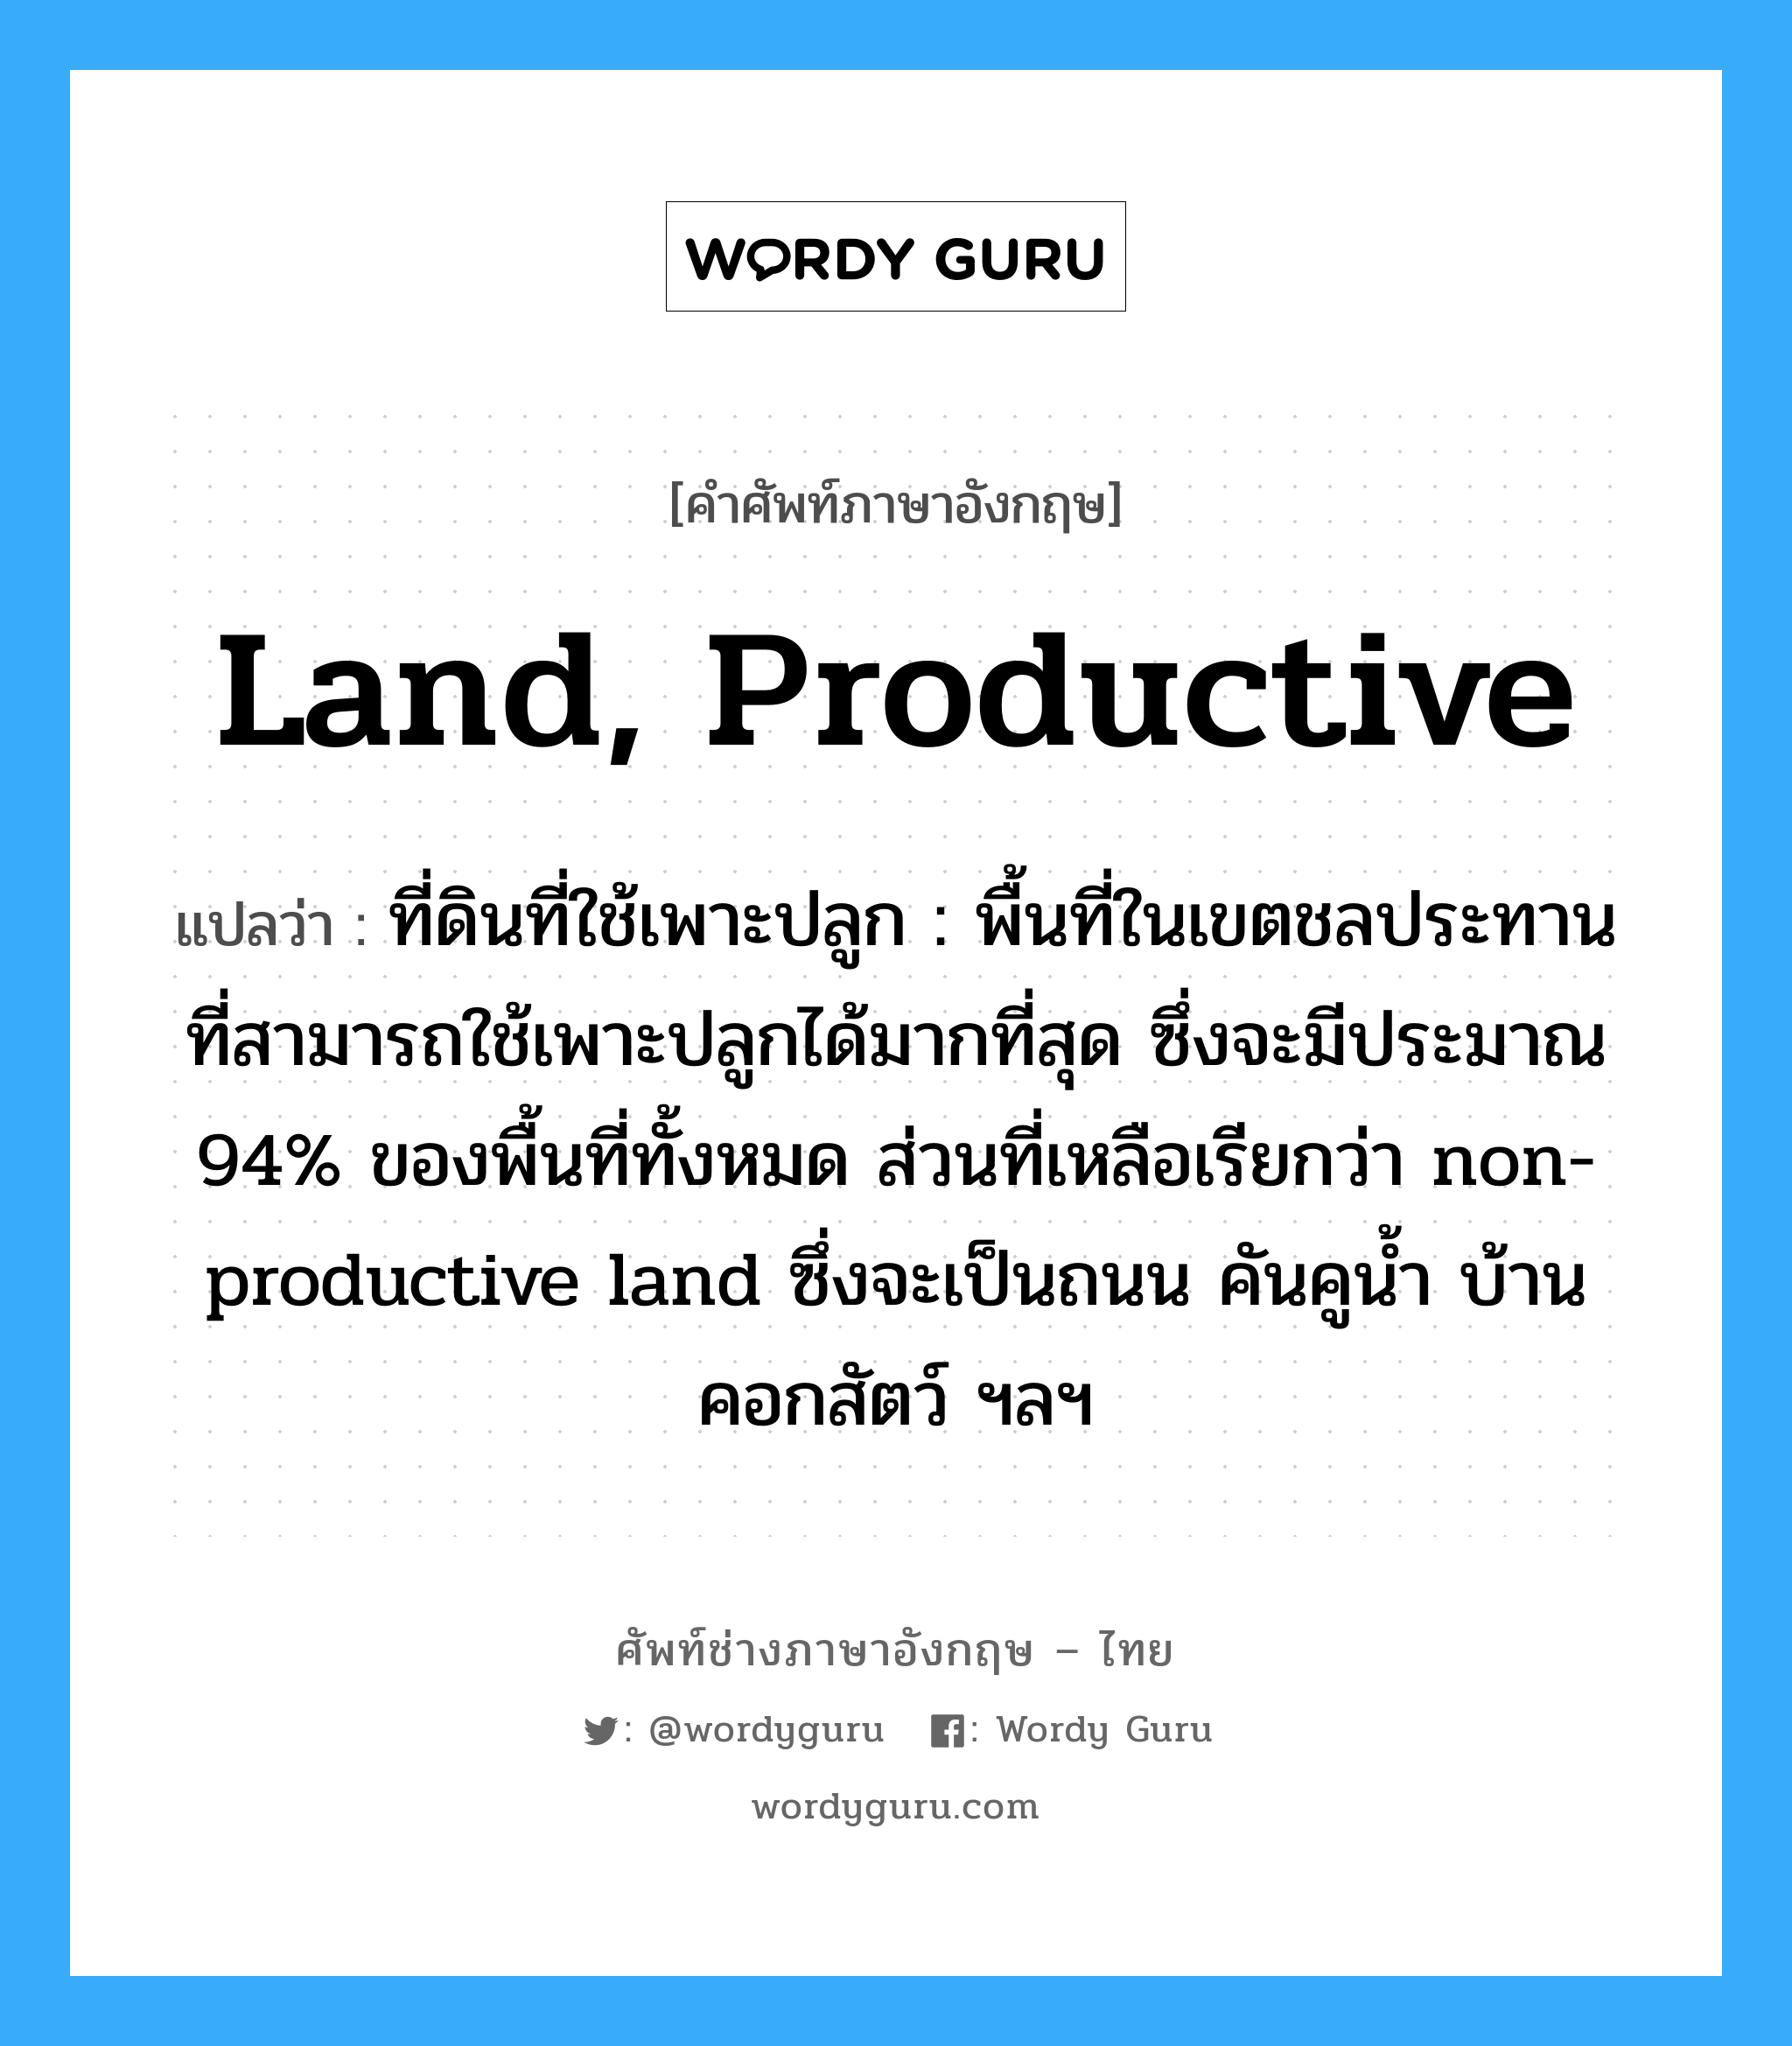 land, productive แปลว่า?, คำศัพท์ช่างภาษาอังกฤษ - ไทย land, productive คำศัพท์ภาษาอังกฤษ land, productive แปลว่า ที่ดินที่ใช้เพาะปลูก : พื้นที่ในเขตชลประทานที่สามารถใช้เพาะปลูกได้มากที่สุด ซึ่งจะมีประมาณ 94% ของพื้นที่ทั้งหมด ส่วนที่เหลือเรียกว่า non-productive land ซึ่งจะเป็นถนน คันคูน้ำ บ้าน คอกสัตว์ ฯลฯ